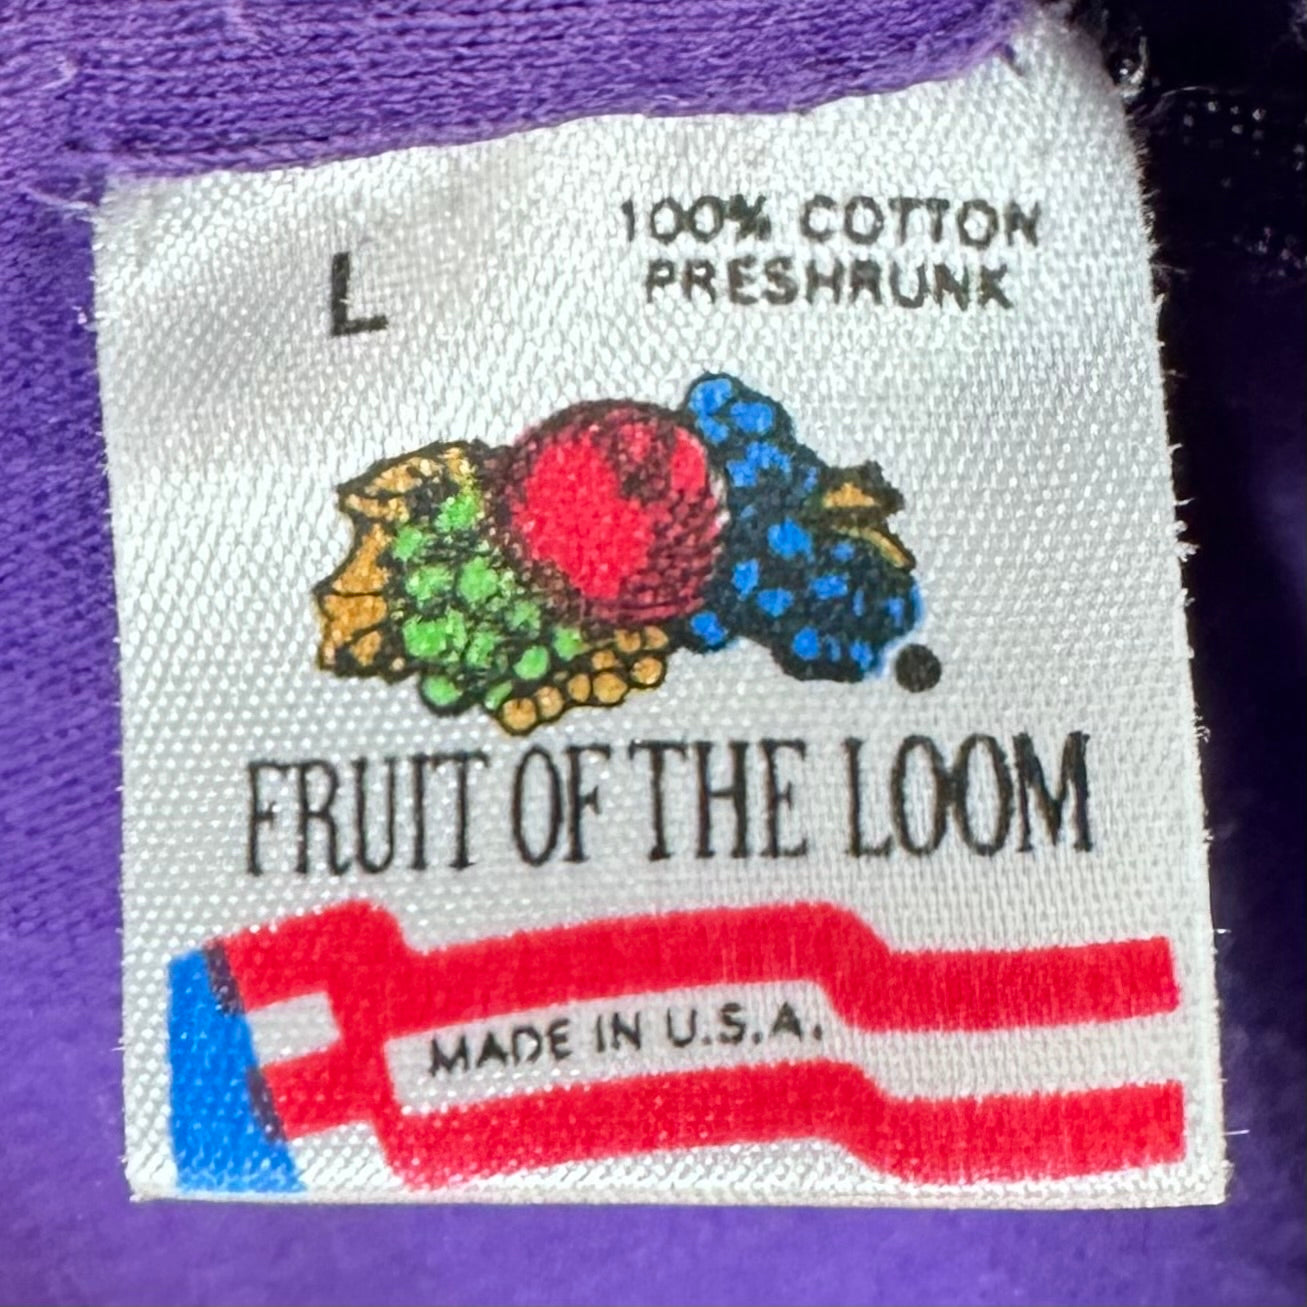 1990s Memphis Beale Street T-Shirt, Fruit of the Loom Size M/L